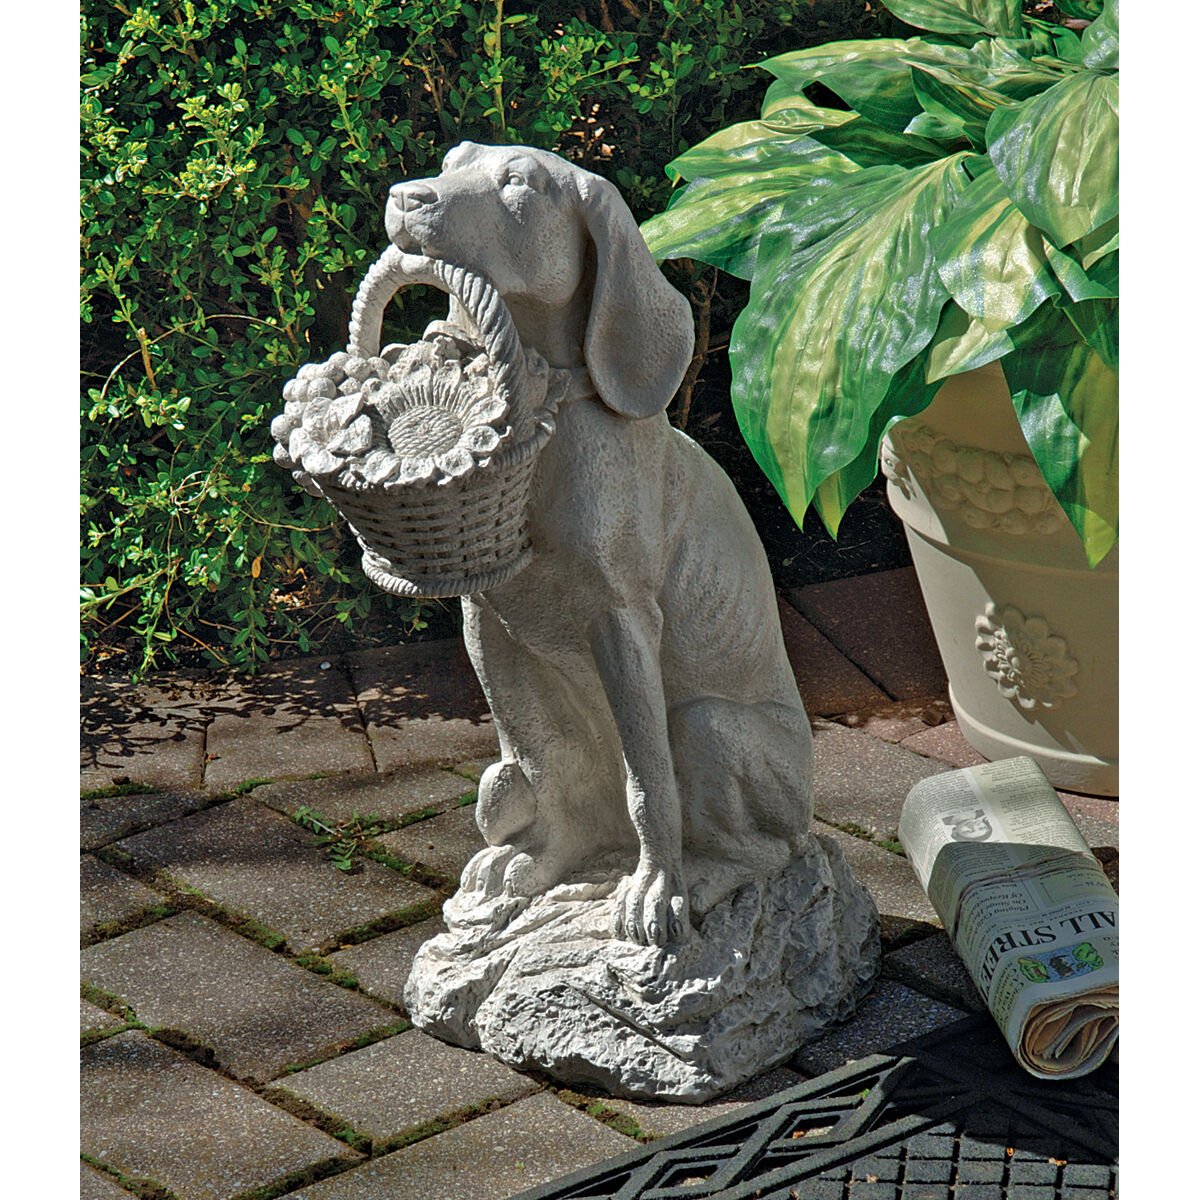 Basket of Flowers Man's Best Friend Canine Companion Dog Sculpture Home Decor